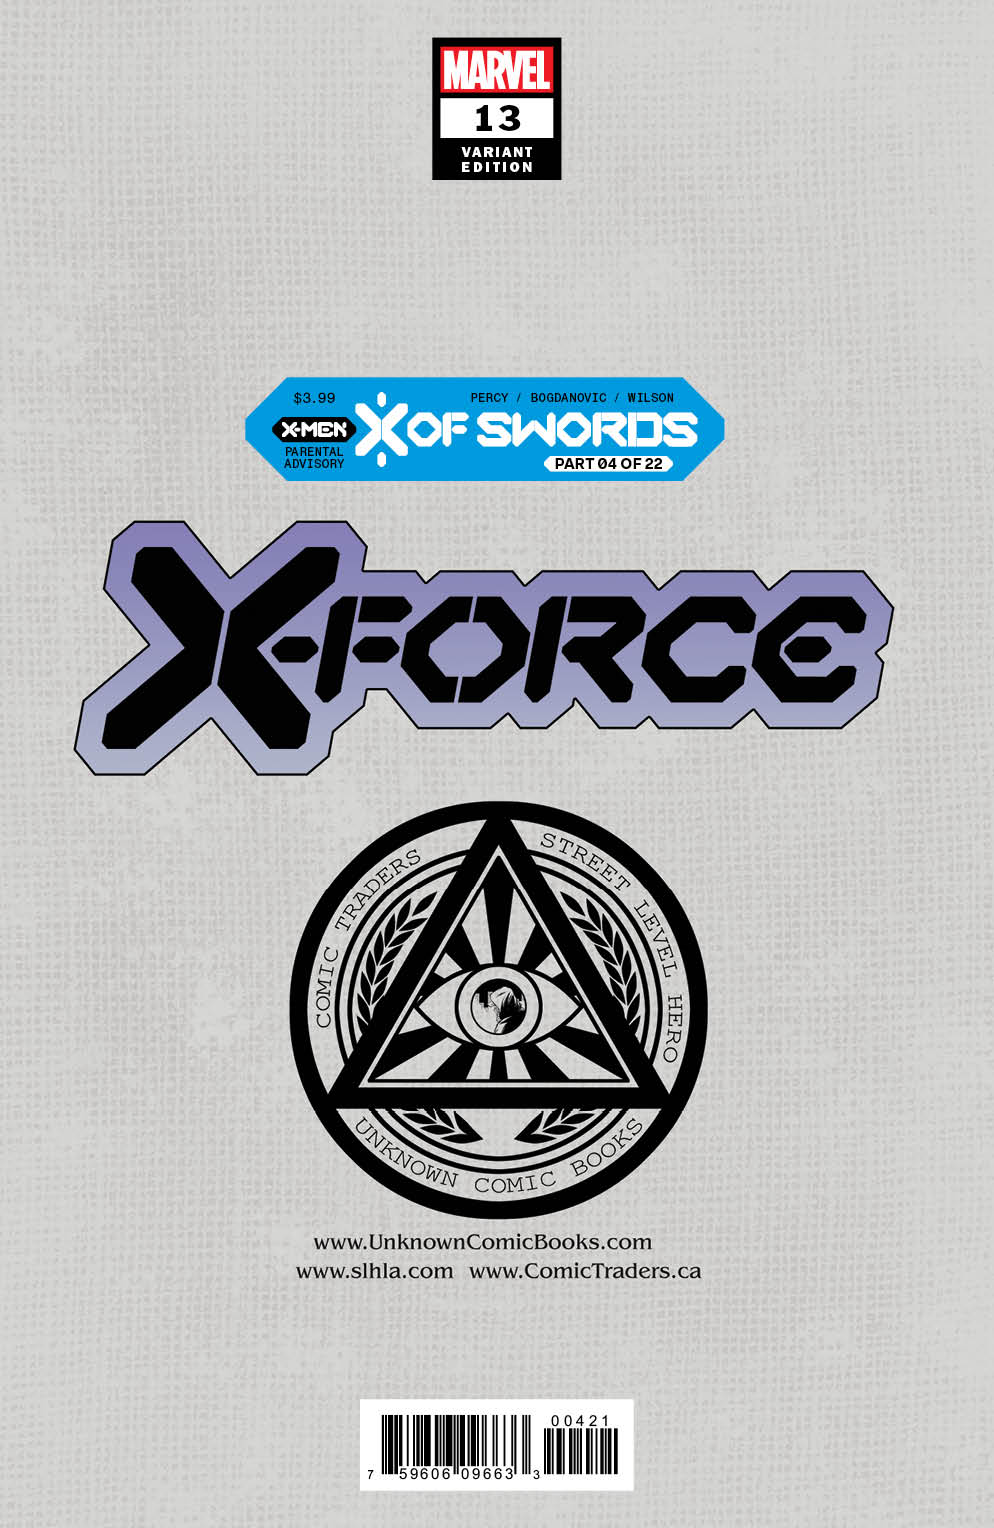 X-FORCE #13 UNKNOWN COMICS MARCO MASTRAZZO EXCLUSIVE VIRGIN VAR XOS (10/07/2020)